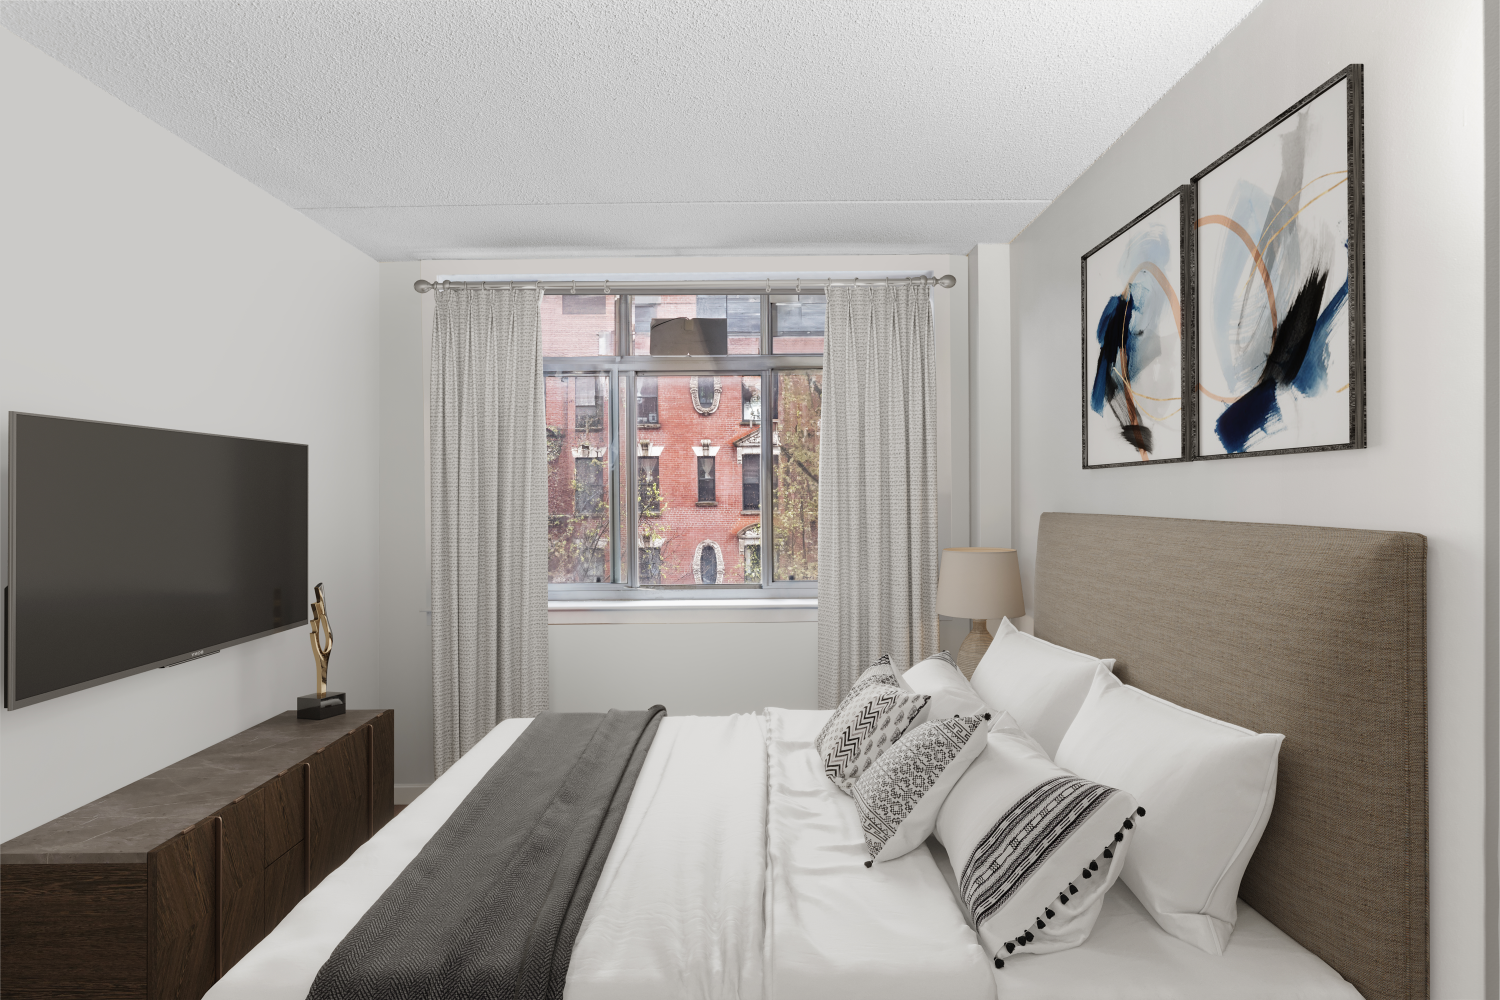 102 Bradhurst Avenue 415, Central Harlem, Upper Manhattan, NYC - 2 Bedrooms  
2 Bathrooms  
5 Rooms - 